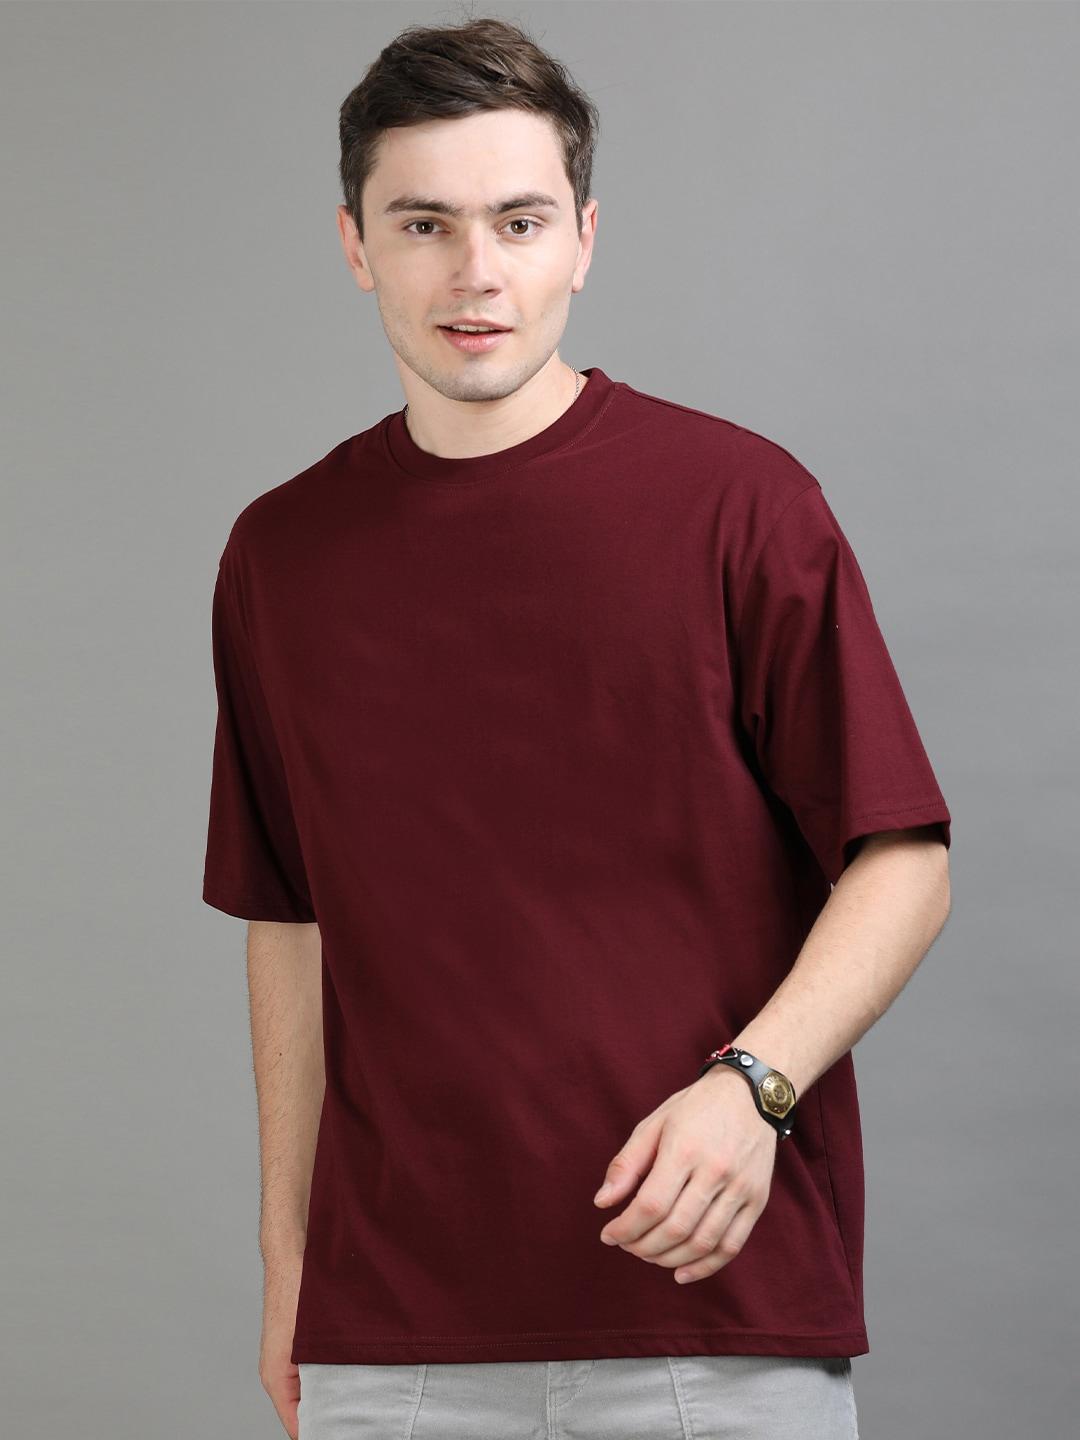 bushirt oversized round neck pure cotton casual t-shirt